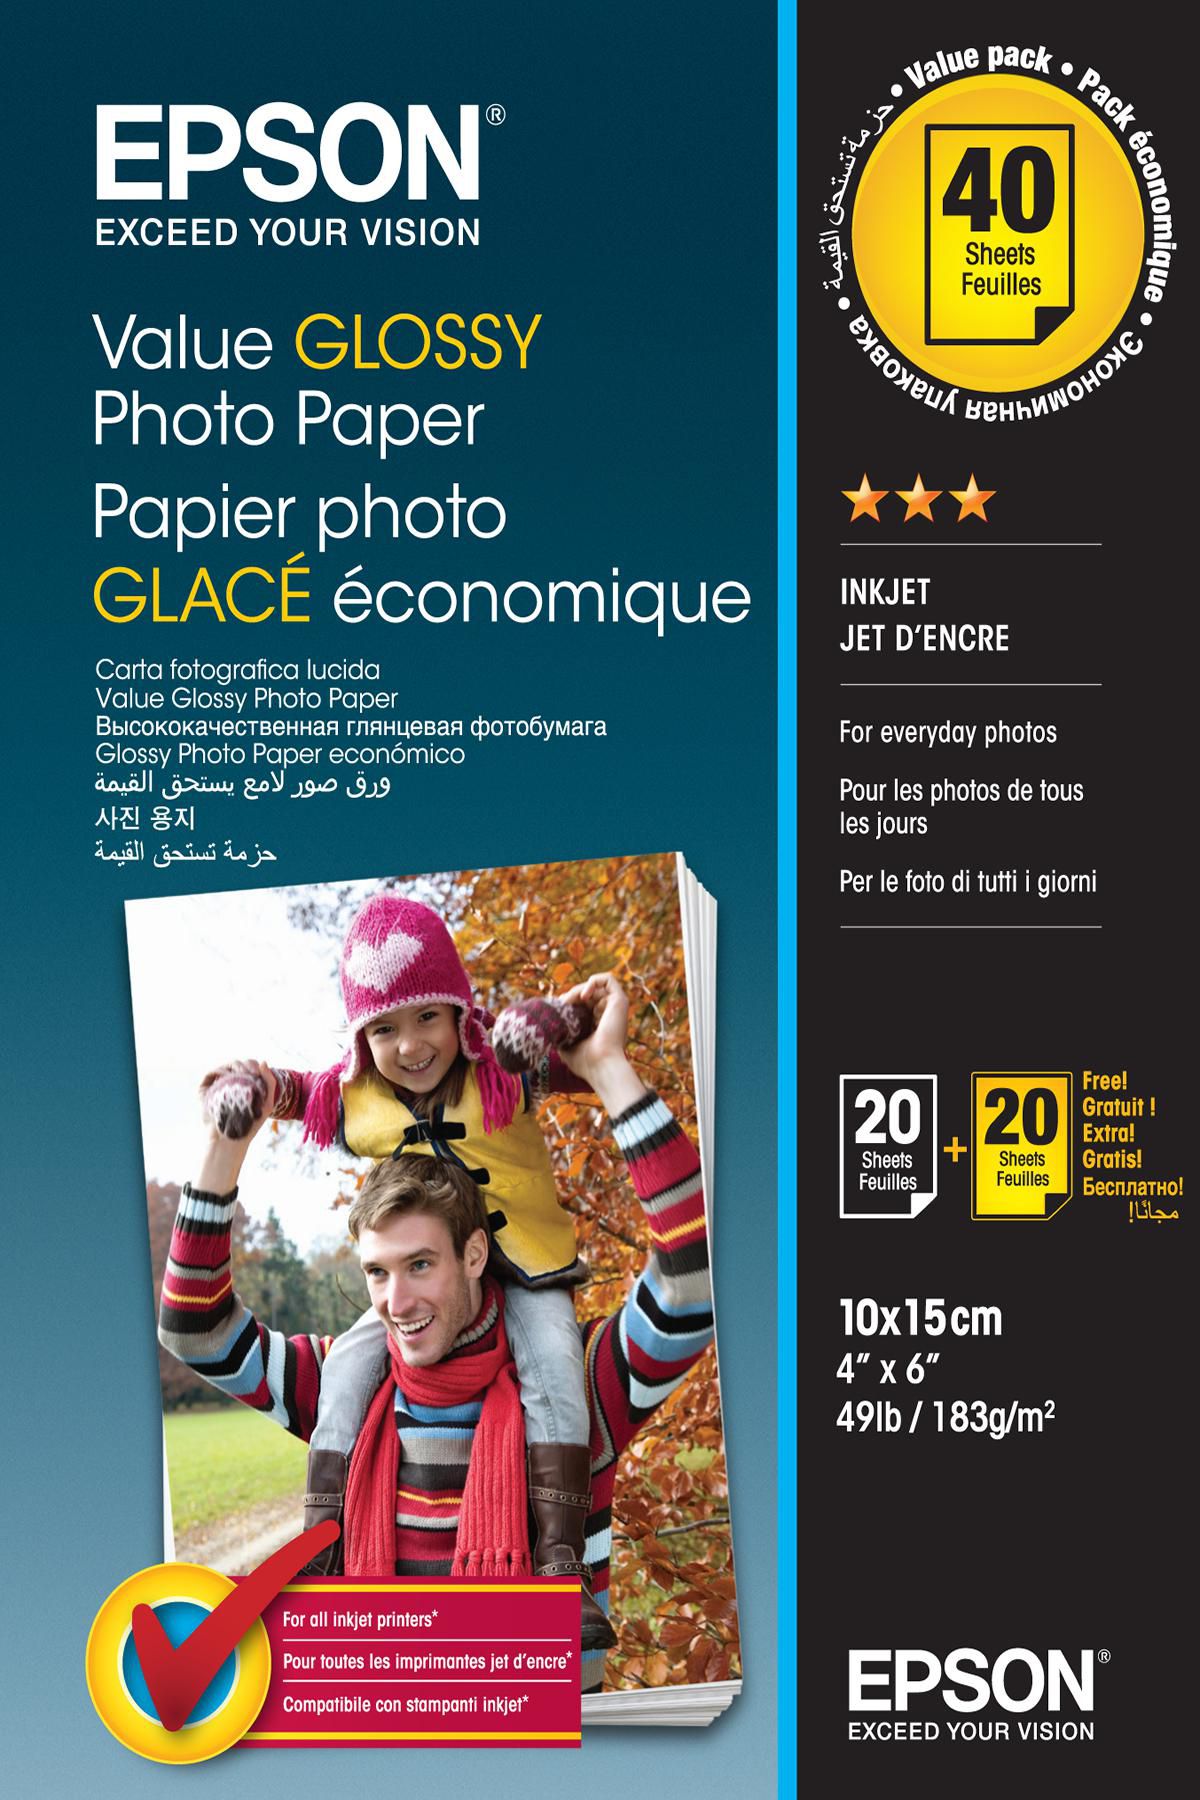 EPSON Photo Paper Glossy (C13S400044) 183g/m², 10x15cm